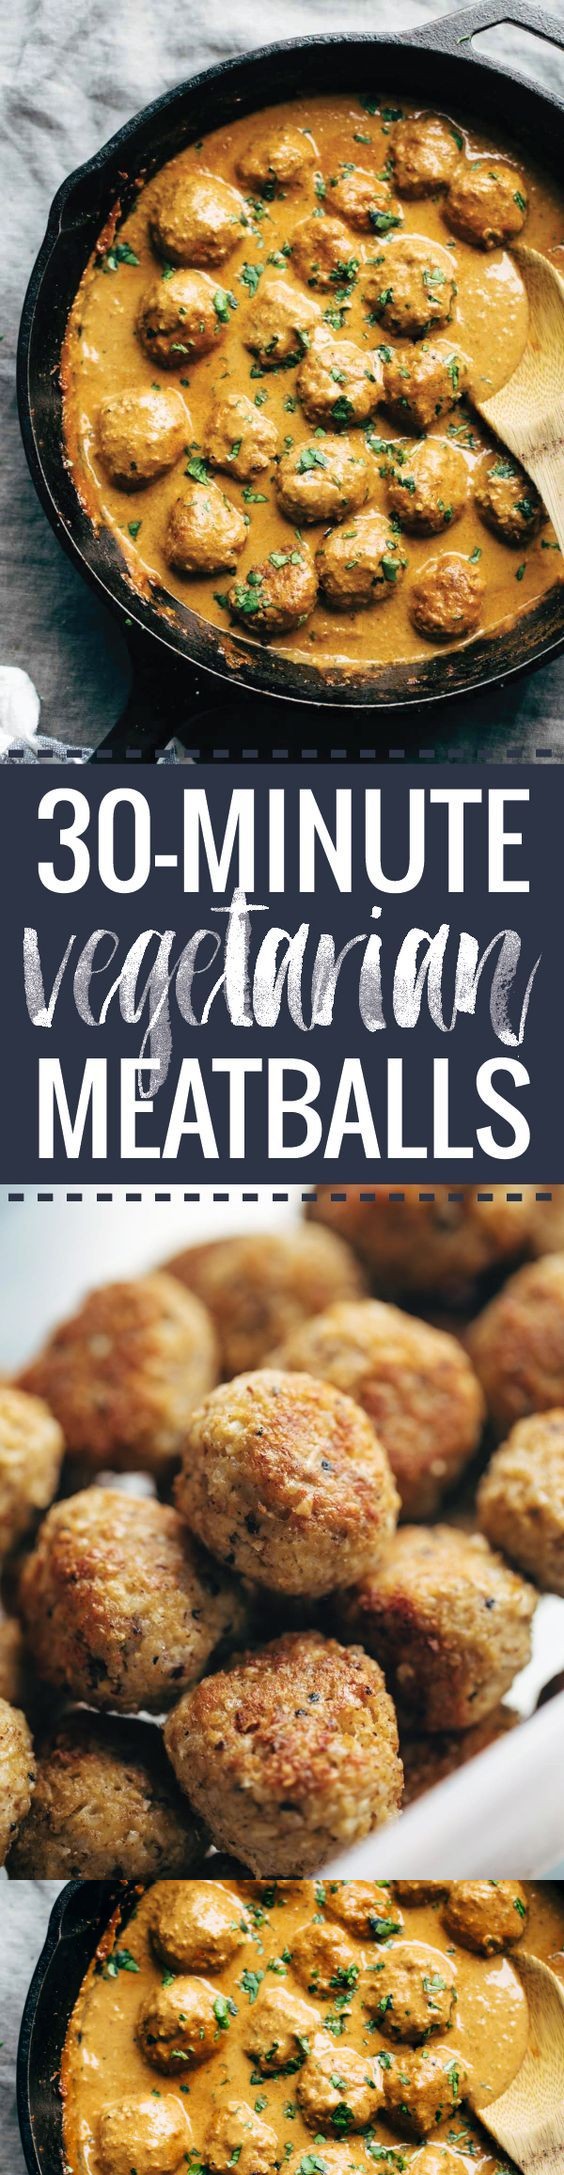 30 Minute Vegetarian Meatballs